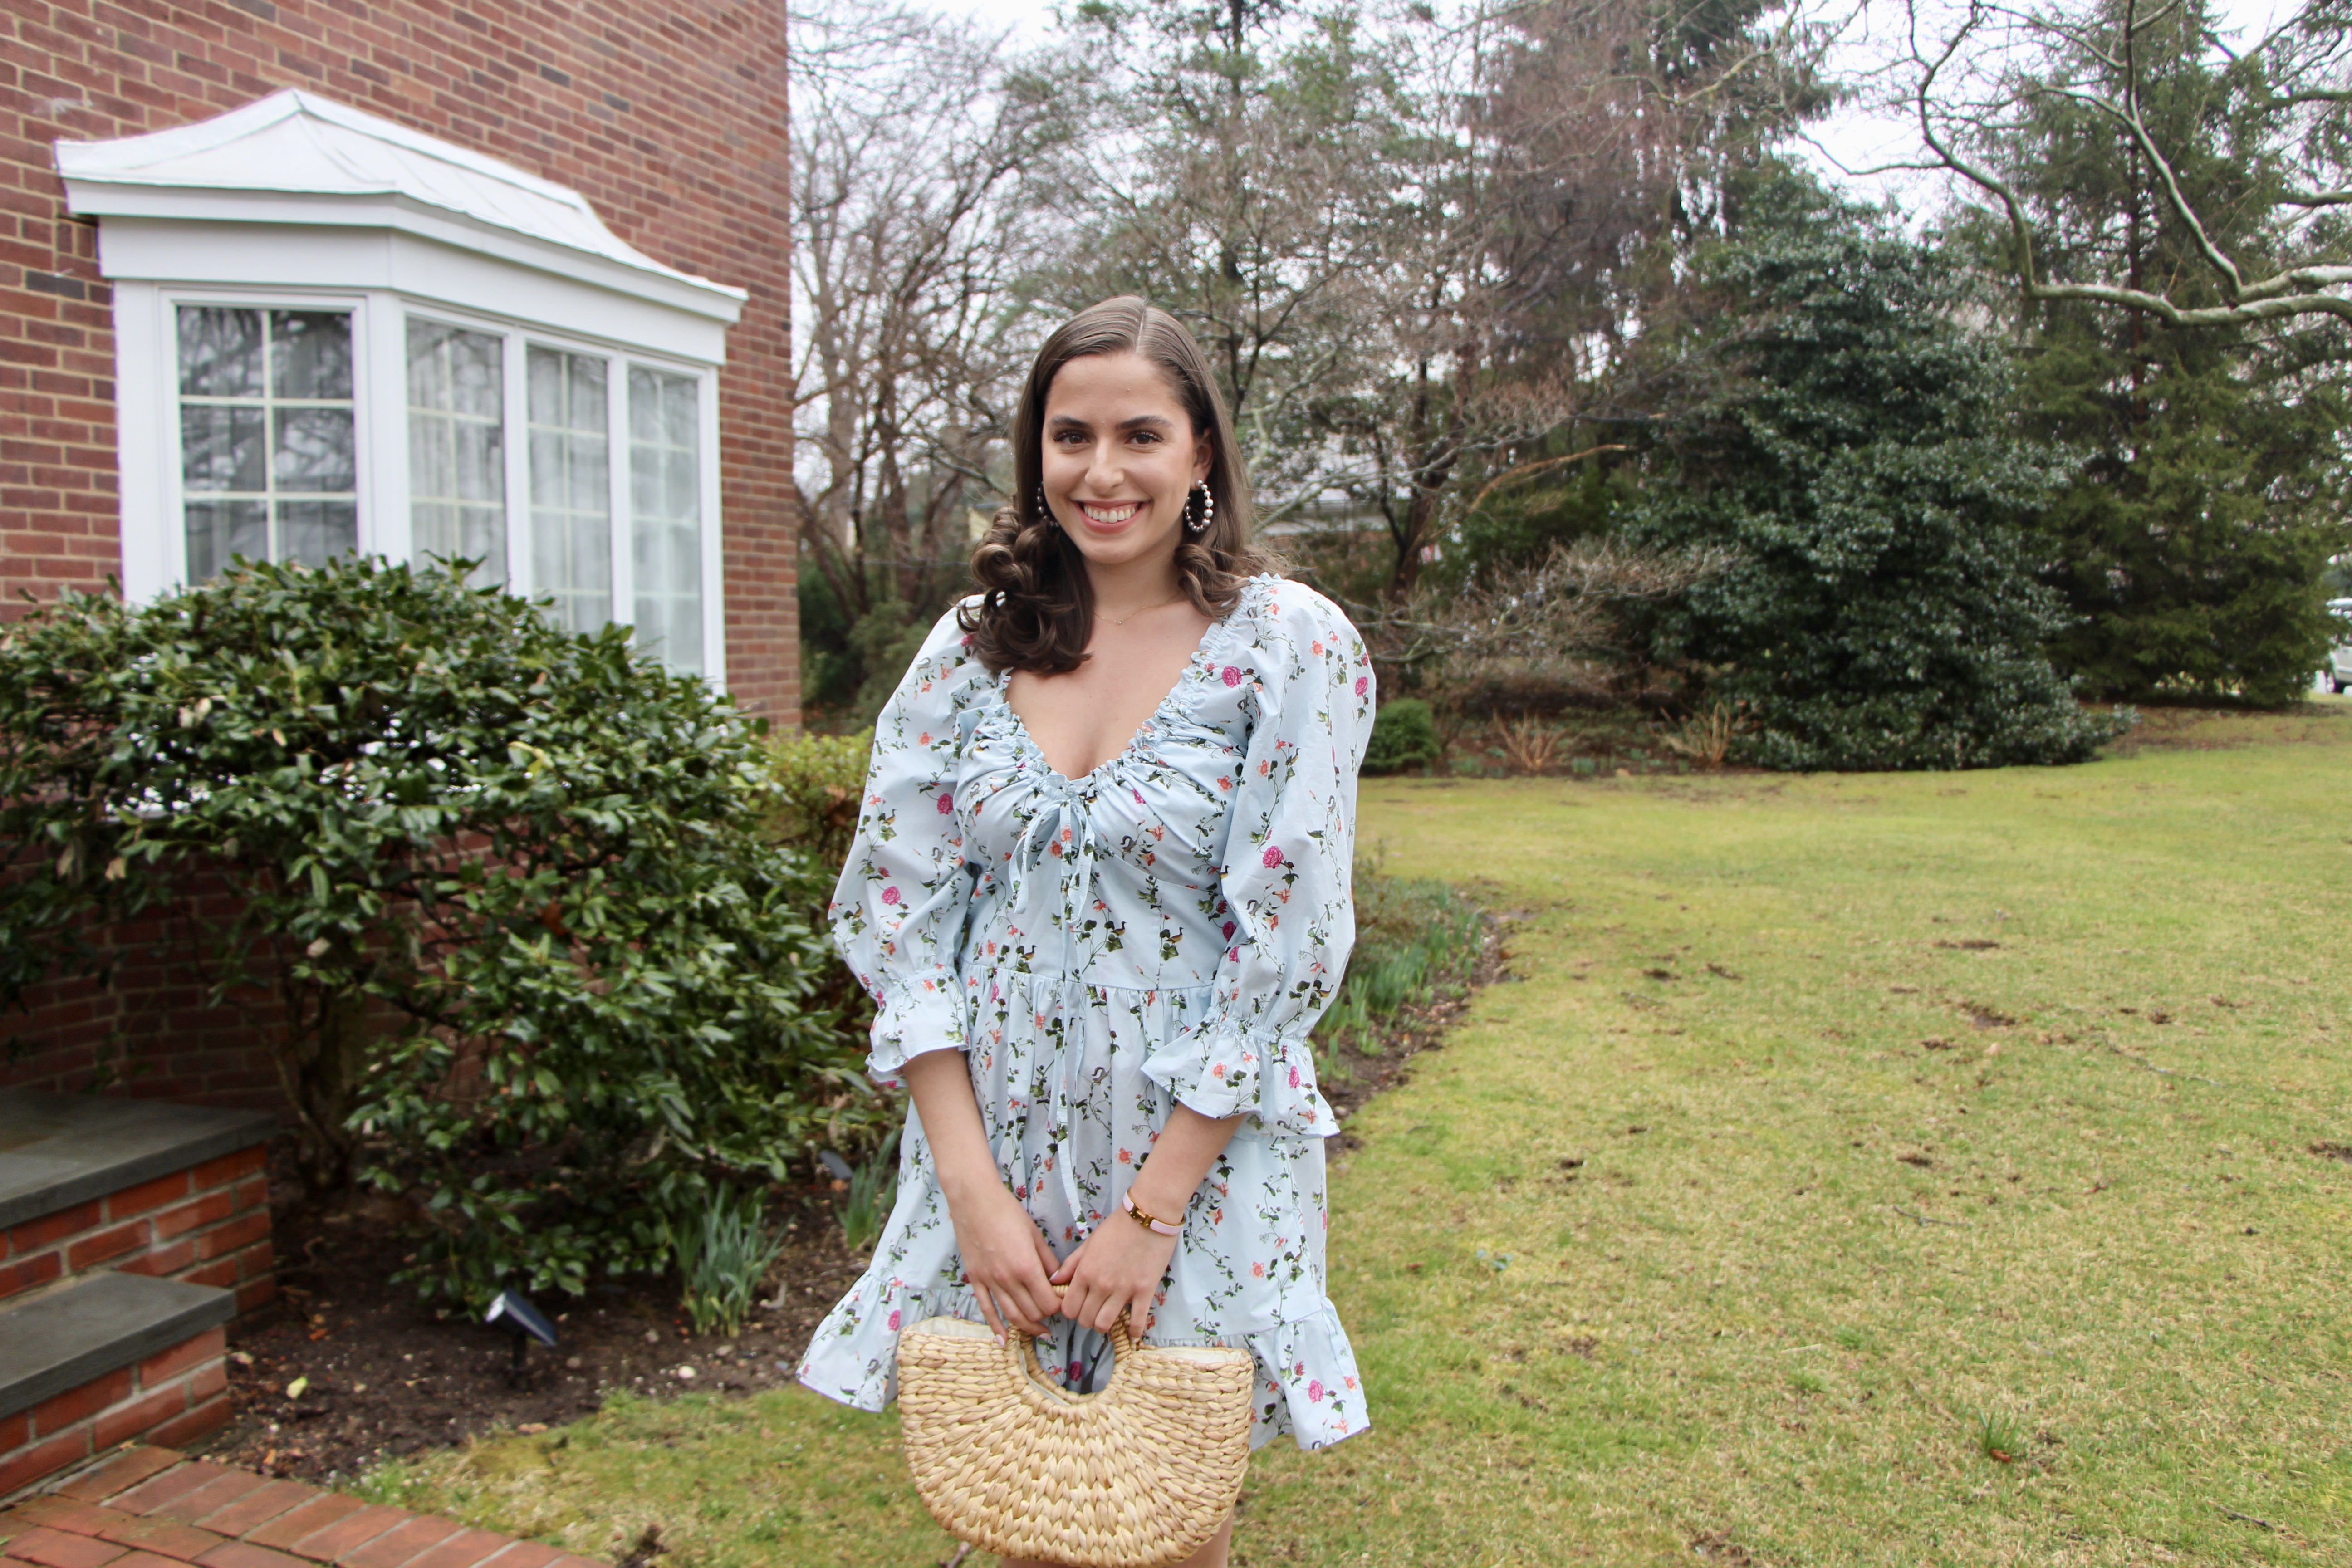 hill house dress, floral dress, straw bag, spring dress, spring outfit, spring